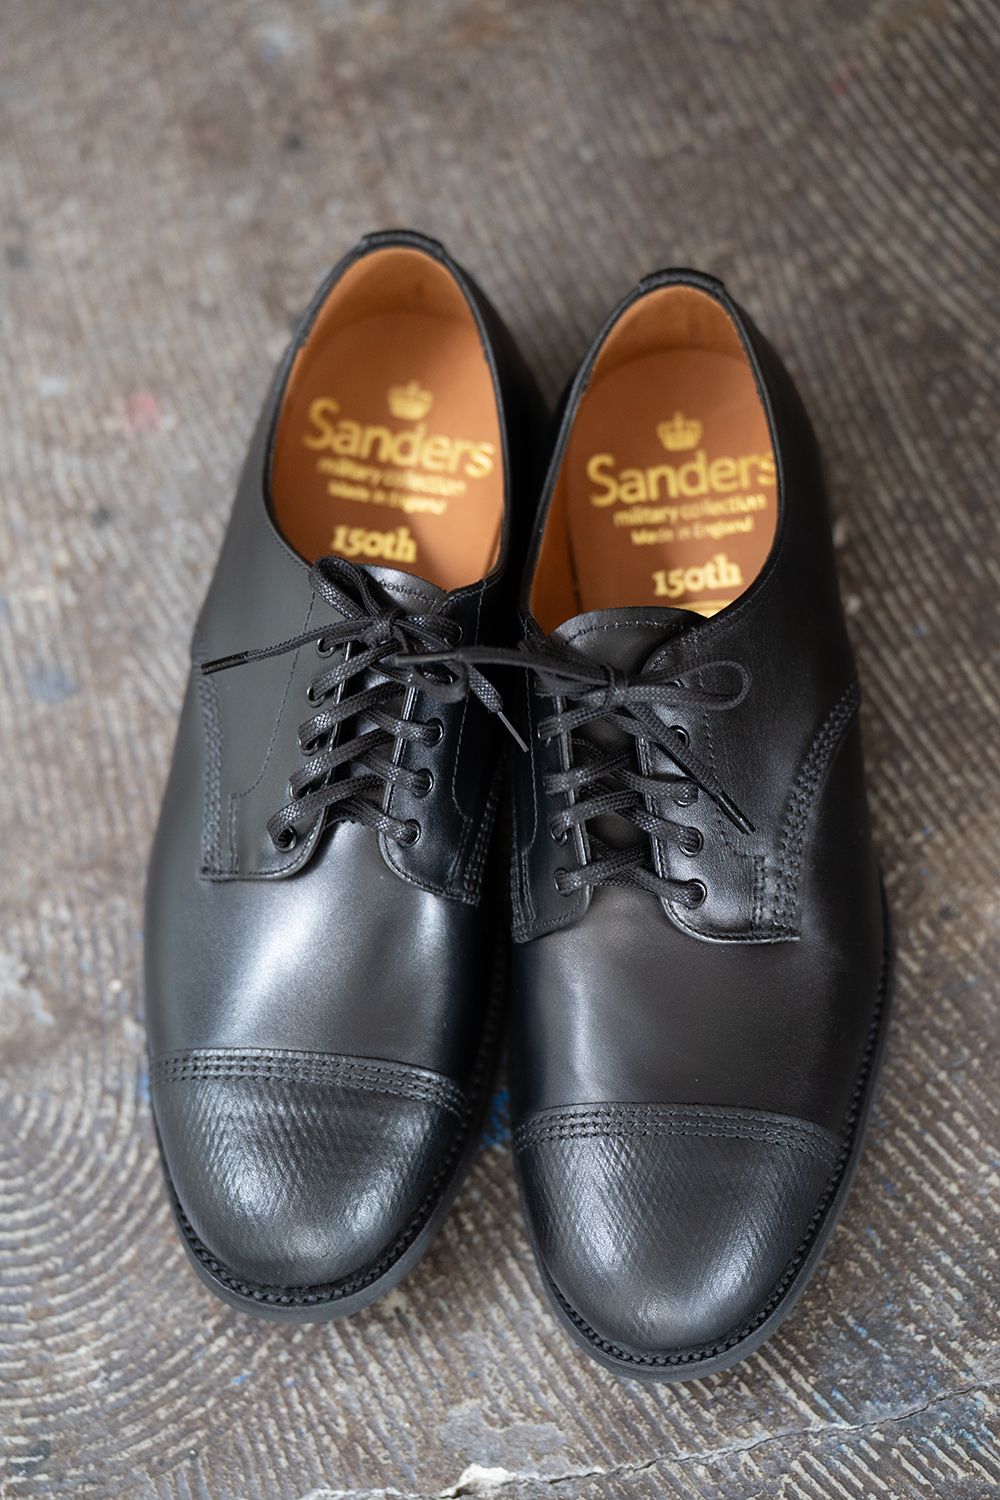 SANDERS - 【ラスト1点】150TH Anniversary Military Derby Shoe(BLACK)【No.1128】 |  Salty